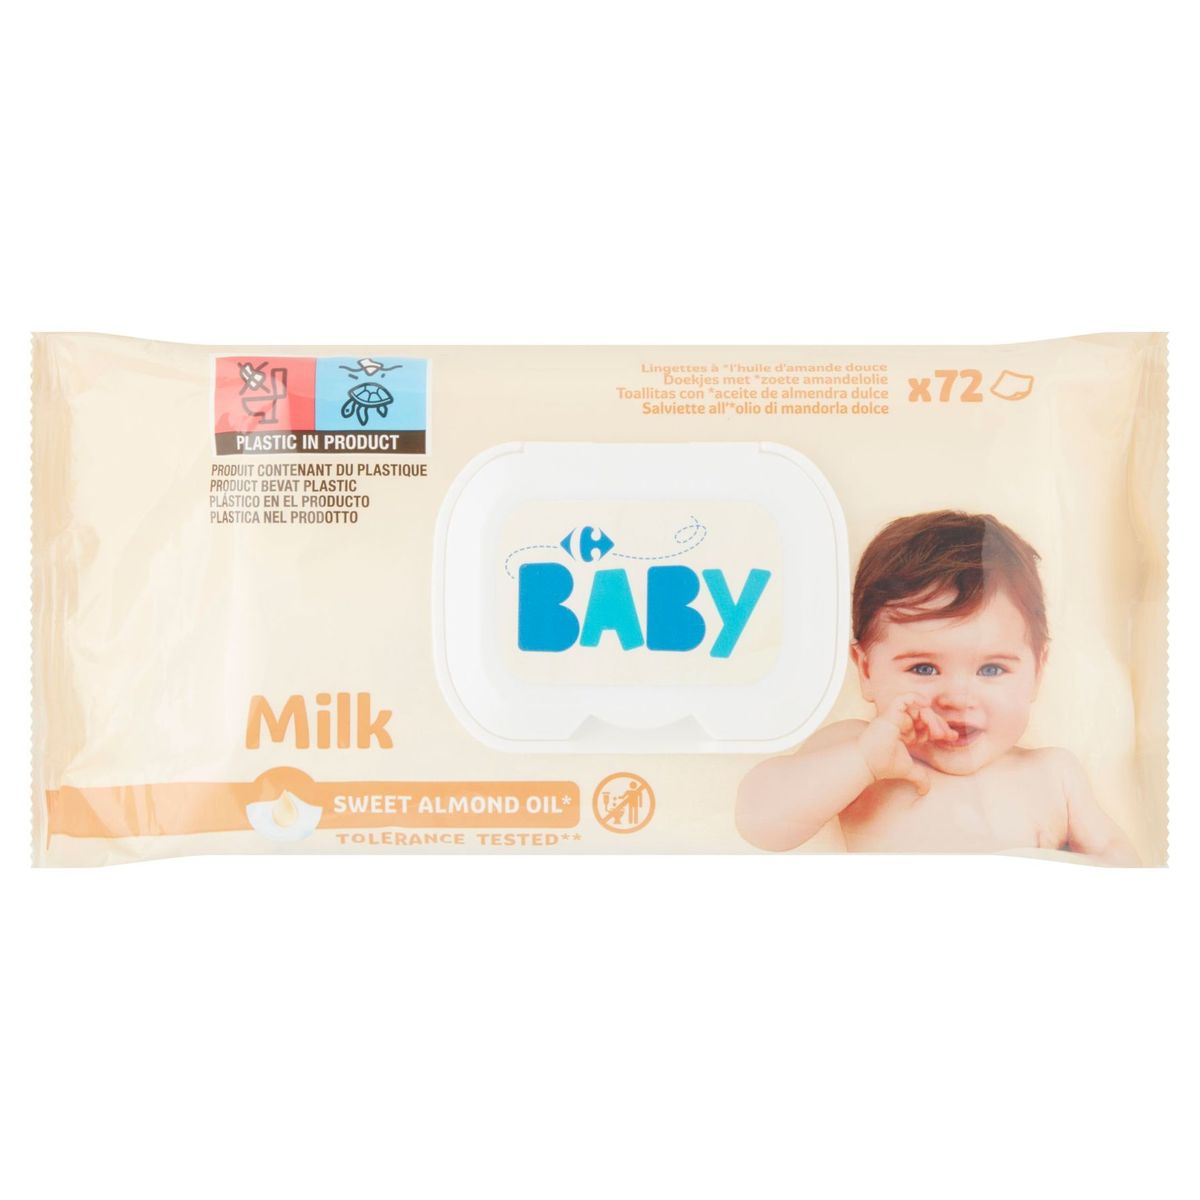 Carrefour BABY Milk 72 Stuks